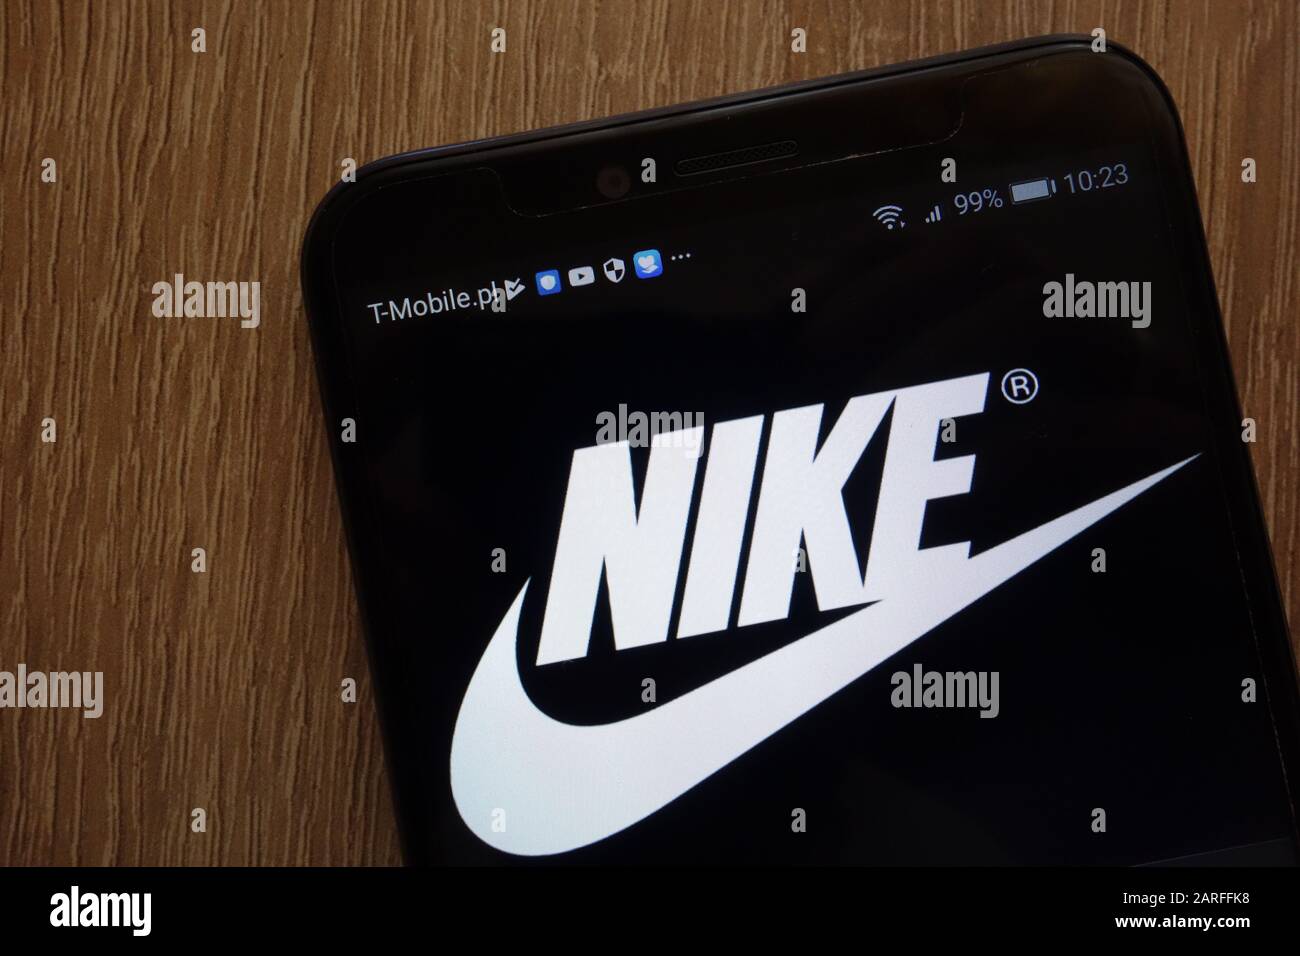 Nike inc -Fotos und -Bildmaterial in hoher Auflösung – Alamy